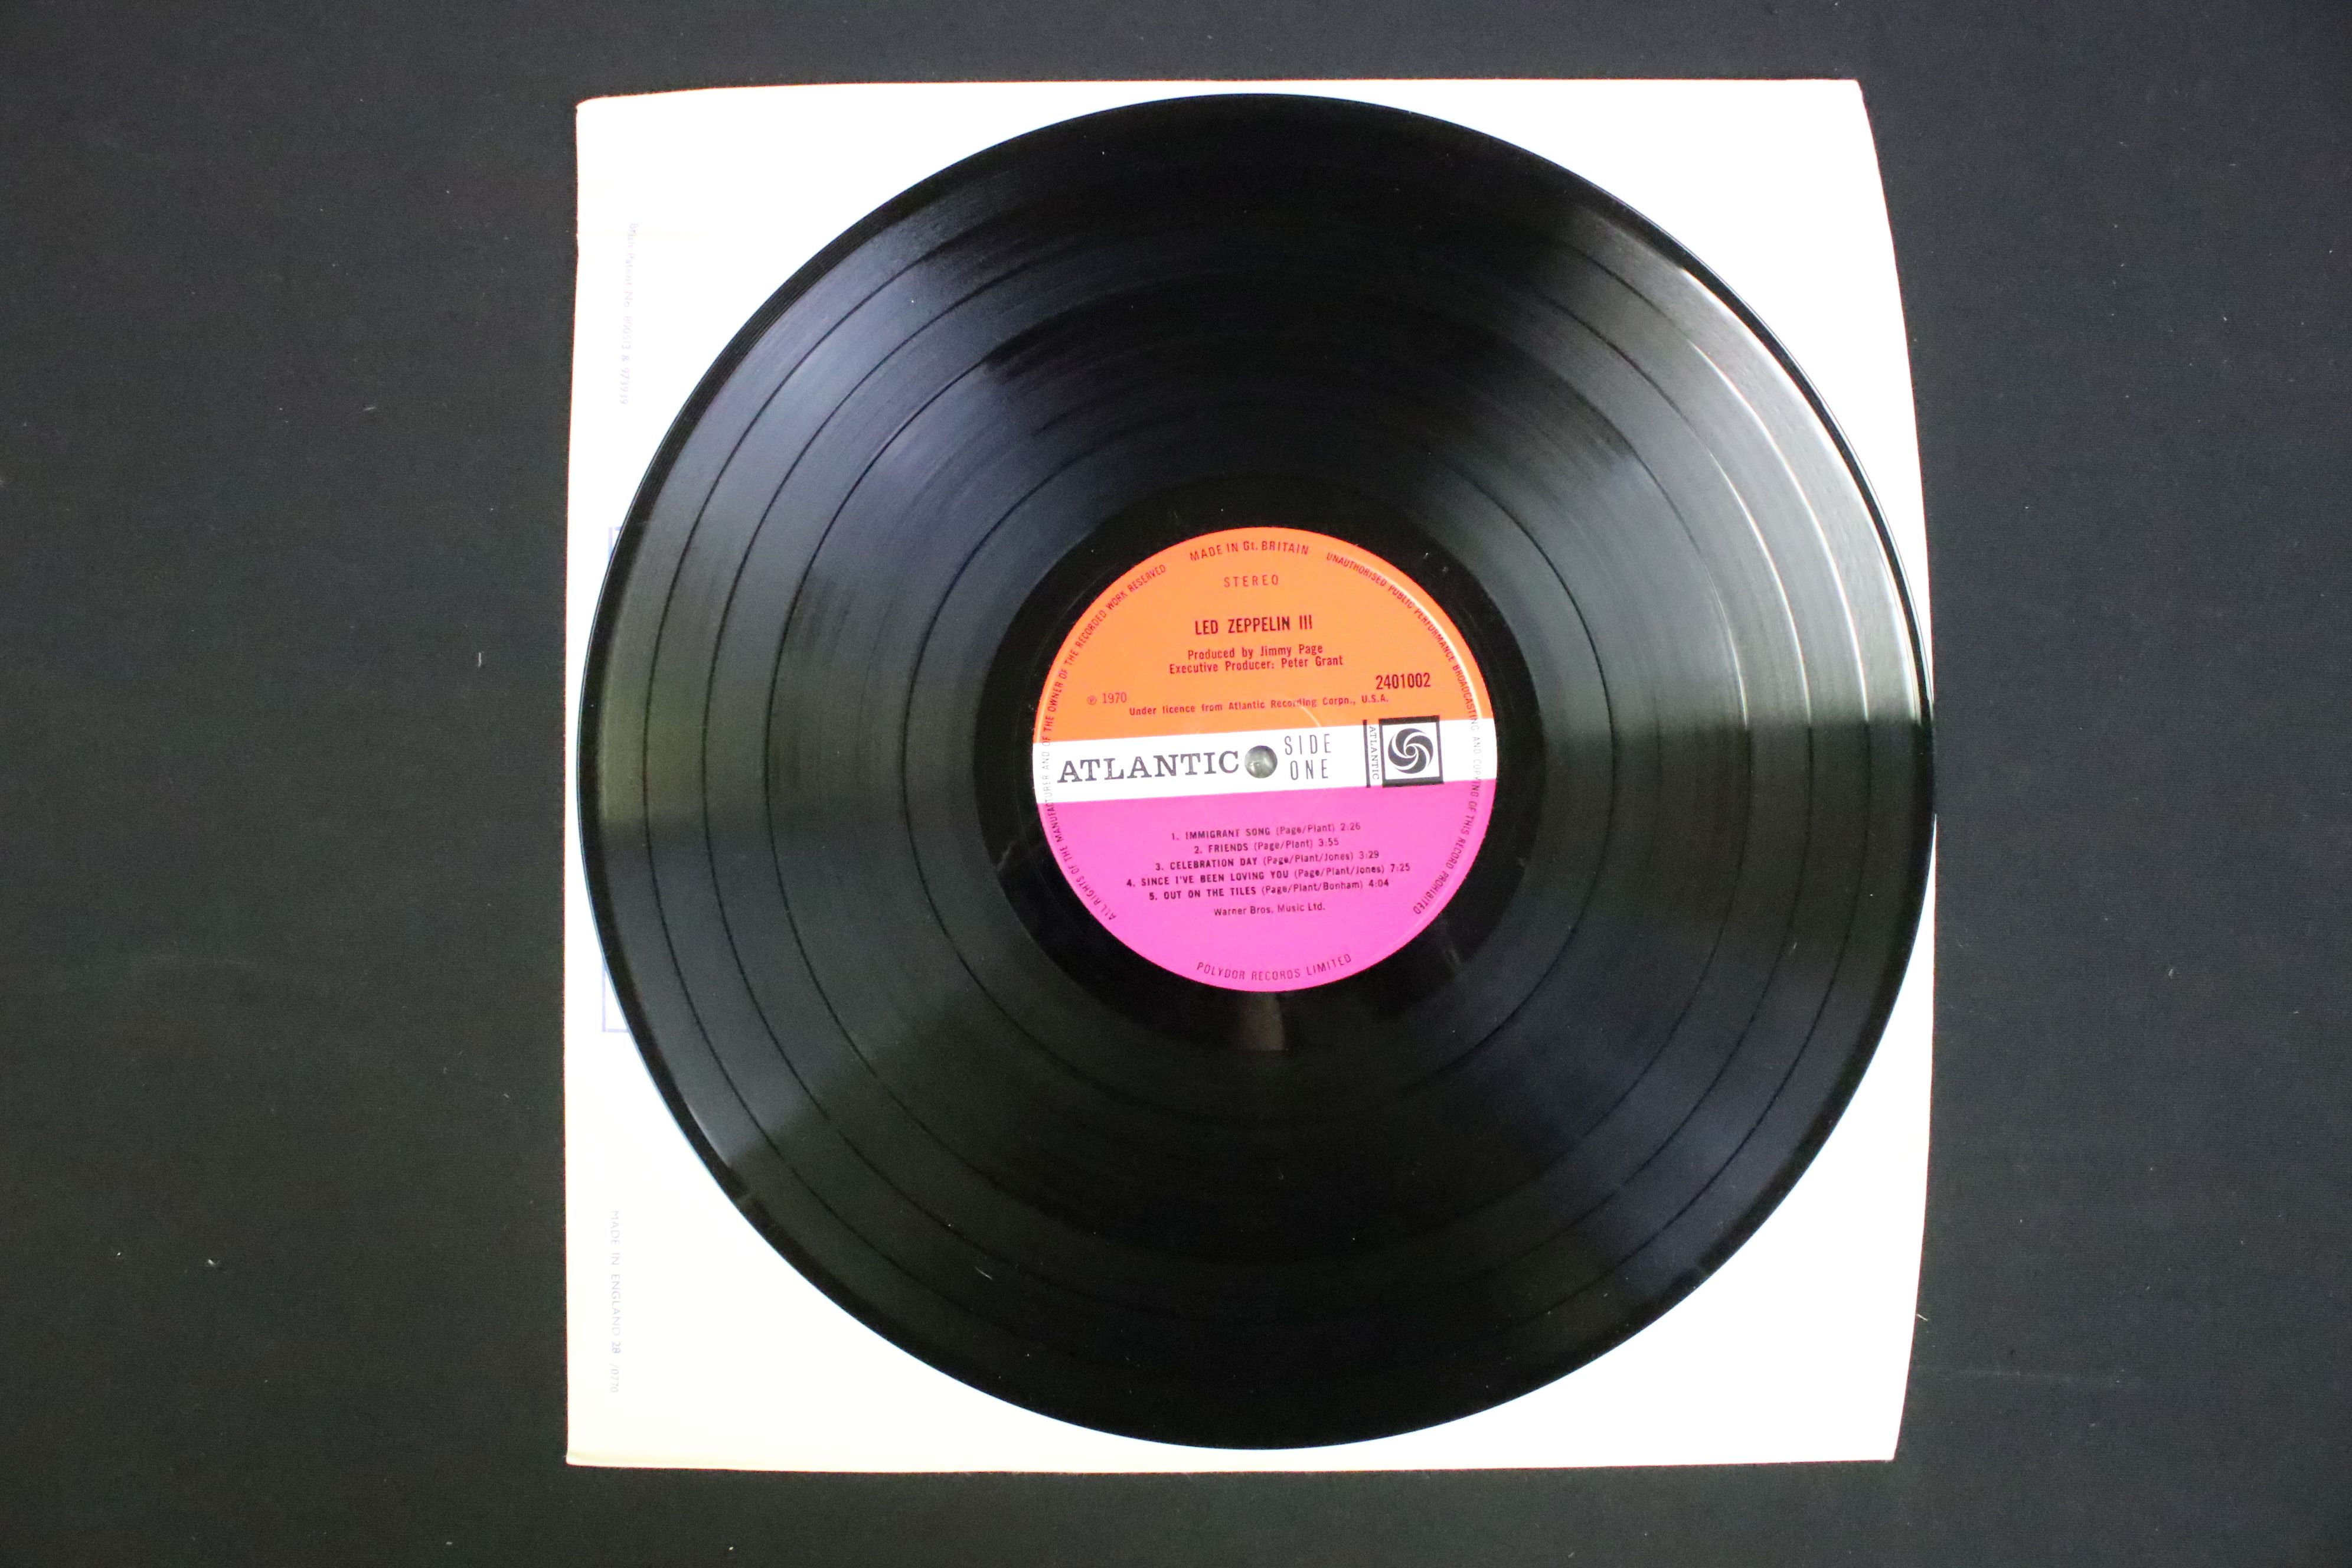 Vinyl - Led Zeppelin III original plum Atlantic labels, A5/B5 matrices, Peter Grant credit, fully - Image 4 of 7